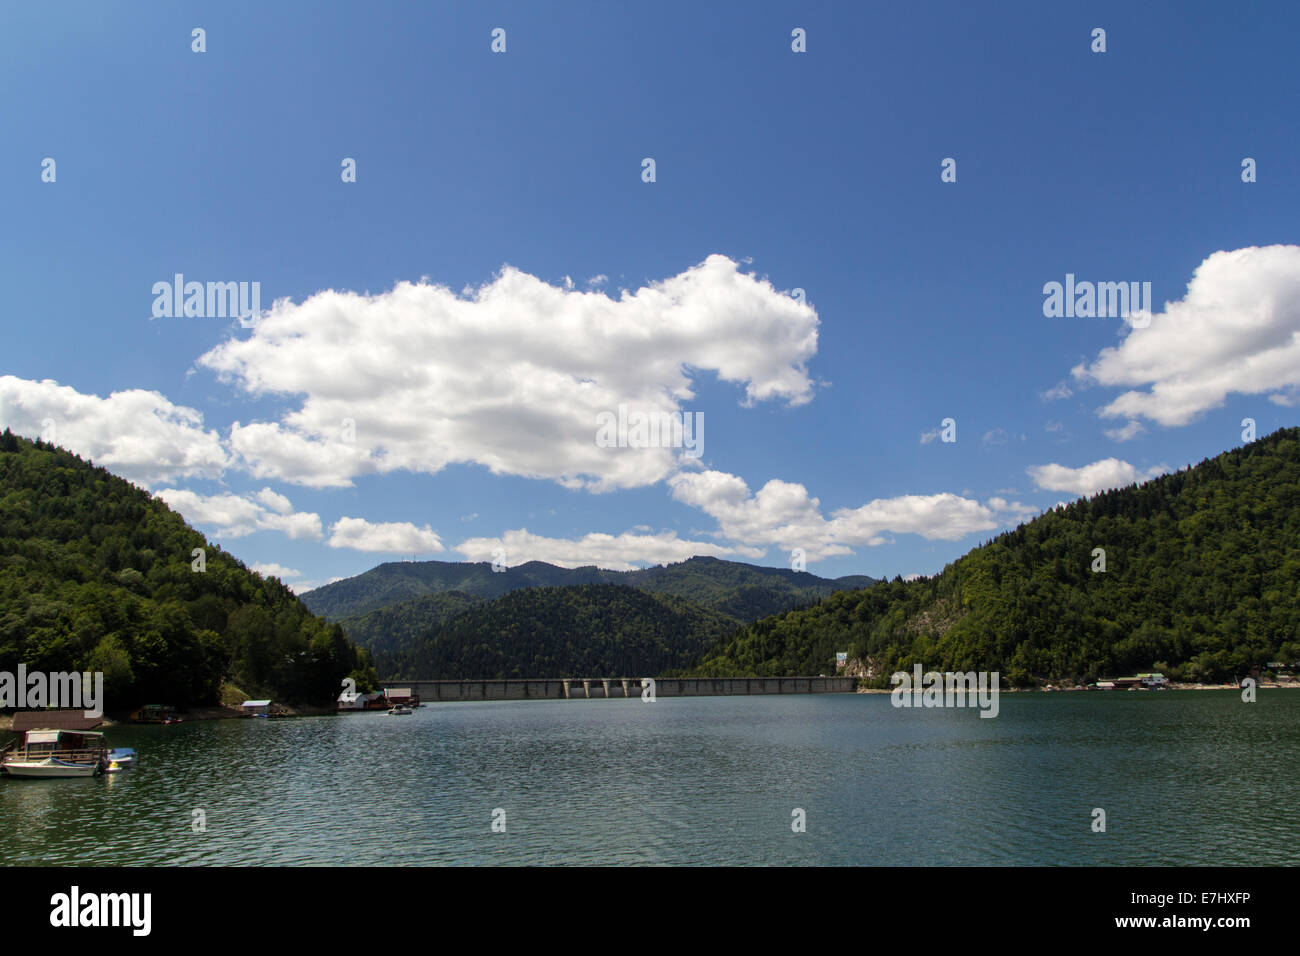 Schönen bewölkten Himmel über dem See. Standort: Bicaz-See, Rumänien. Stockfoto